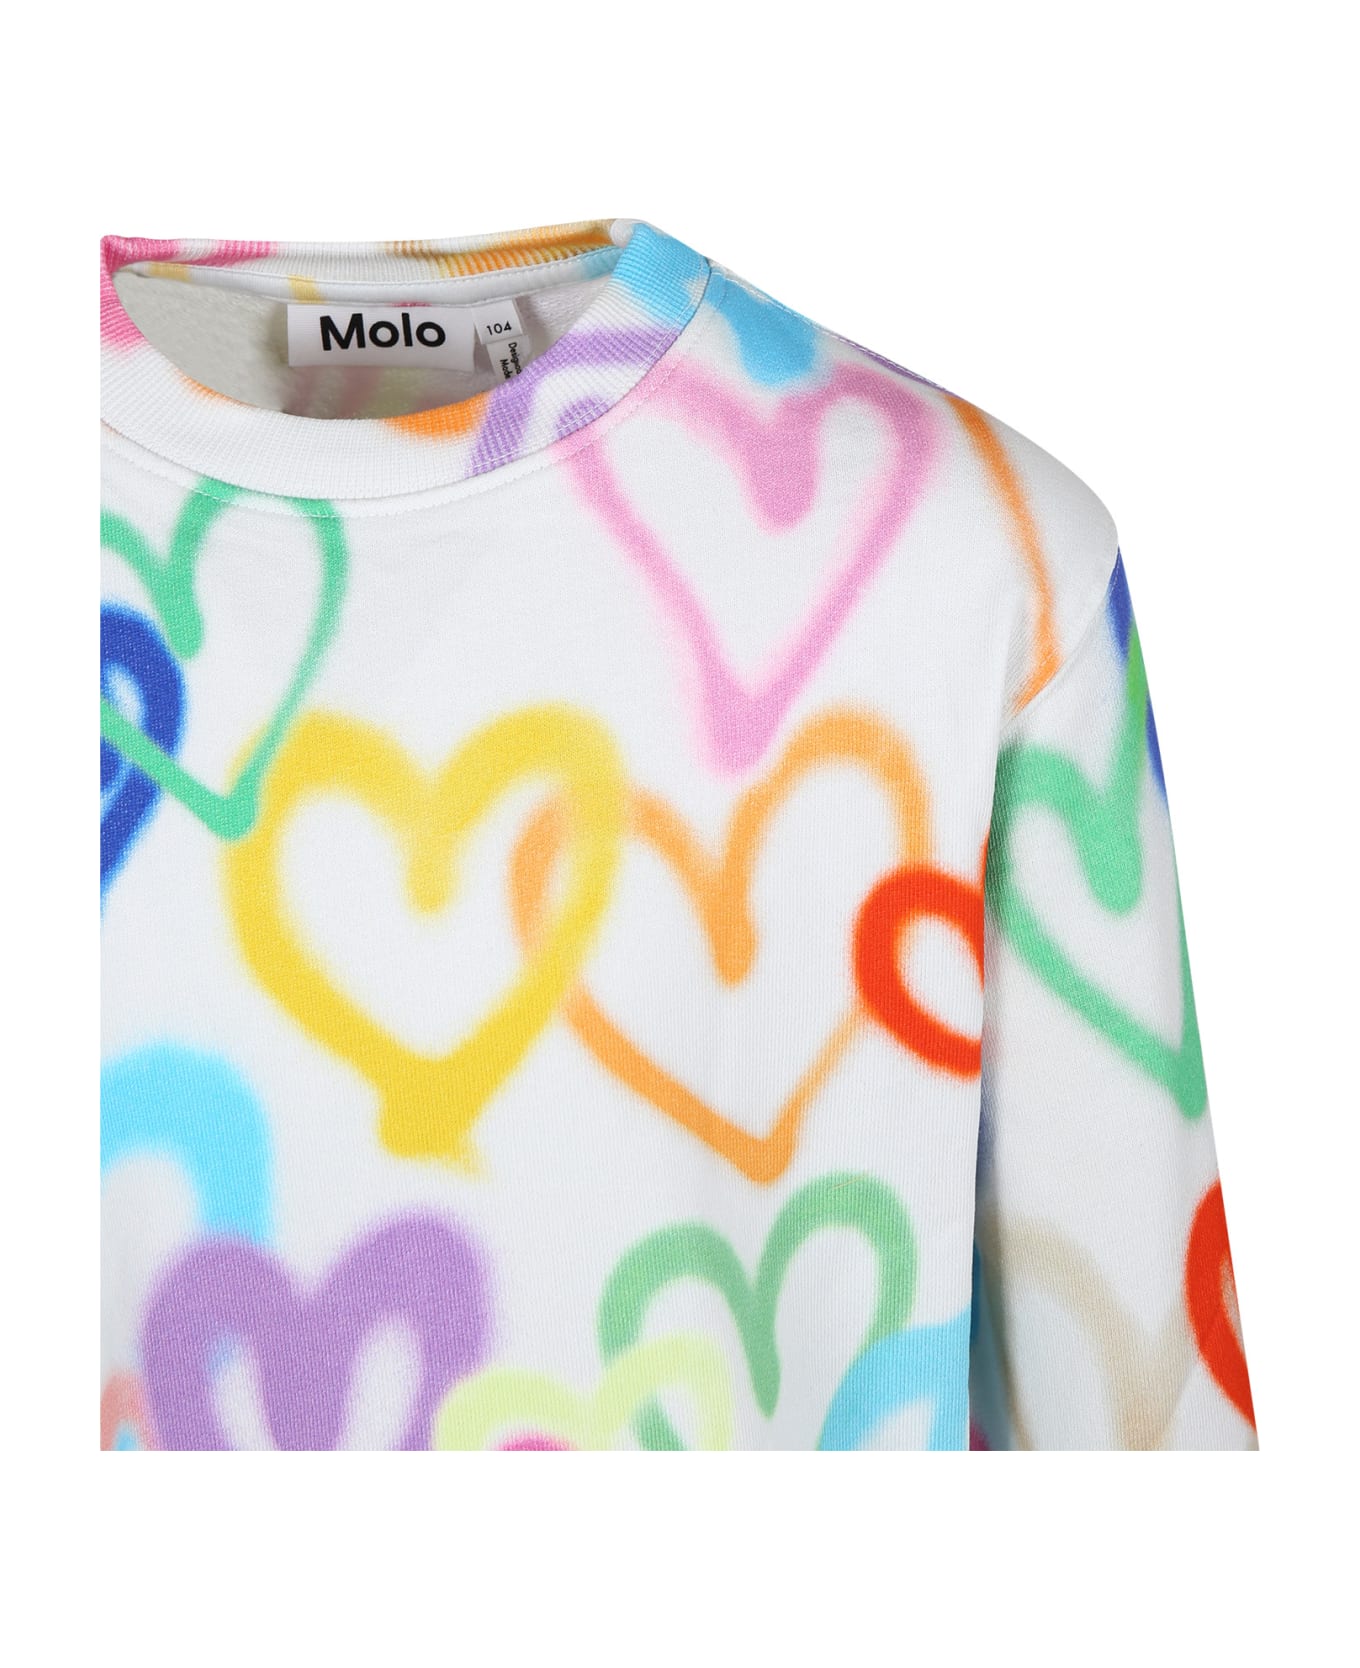 Molo White Sweatshirt For Kids With Multicolor Hearts - White